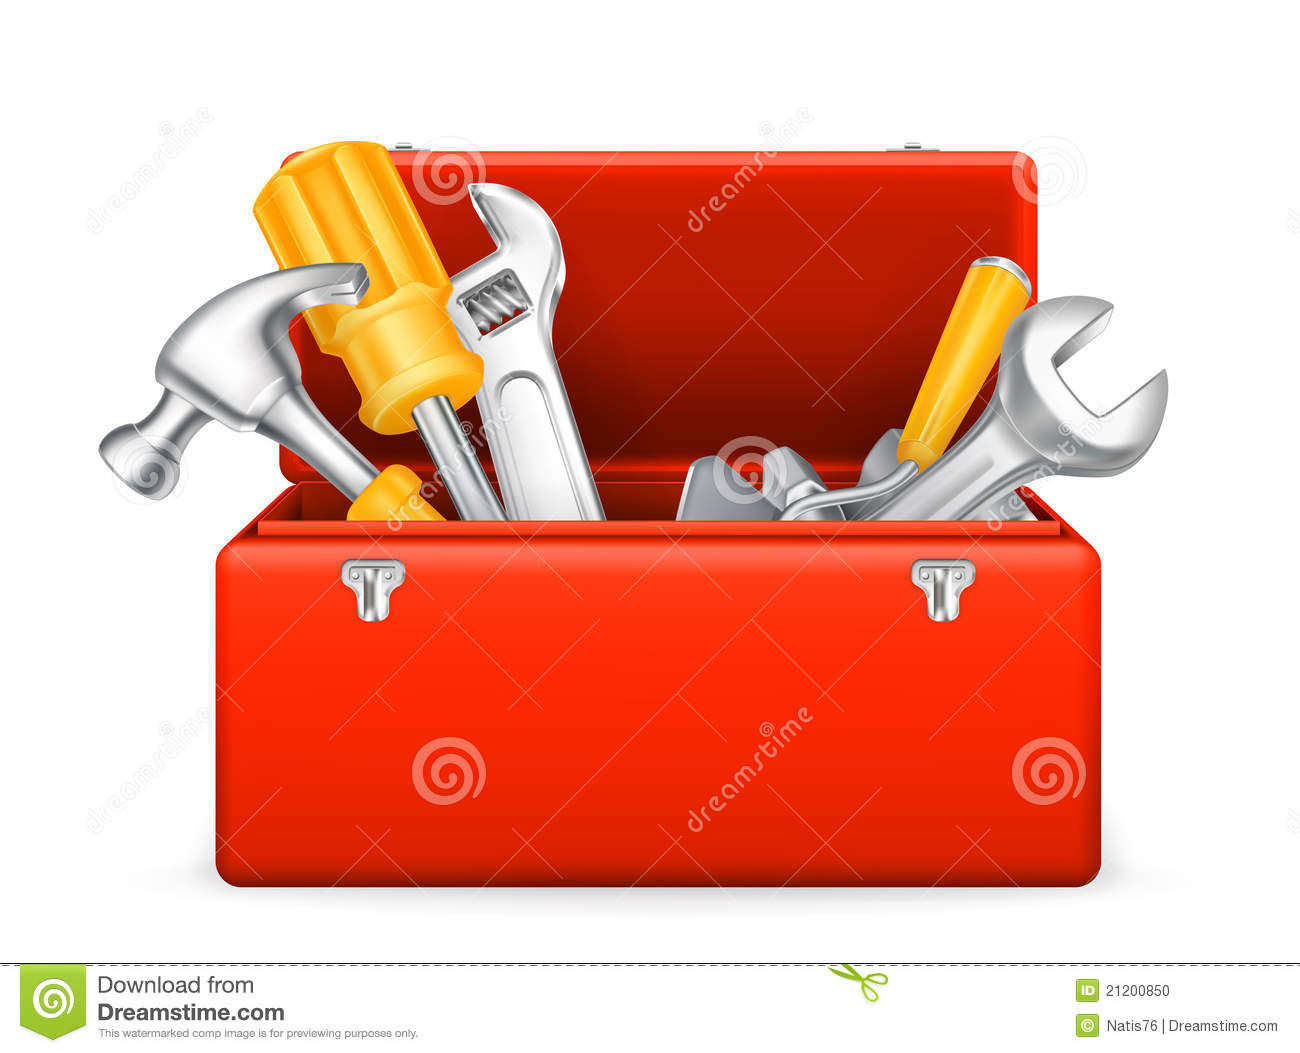 Tool clipart toolbox clipart